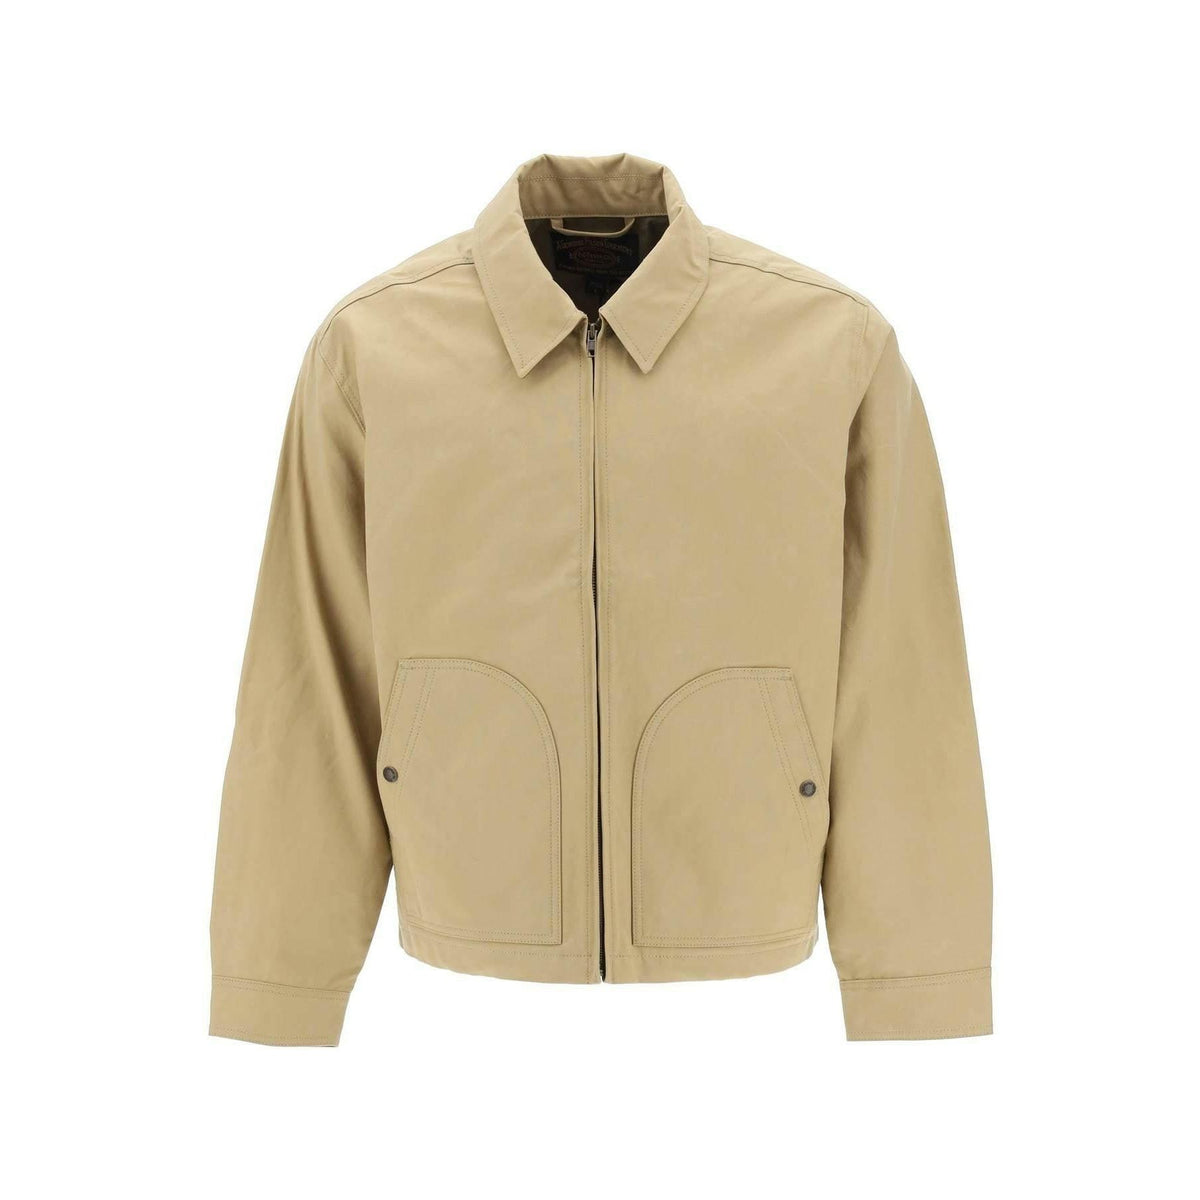 FILSON - Ranger Crewman Dry-Waxed Cotton Jacket - JOHN JULIA